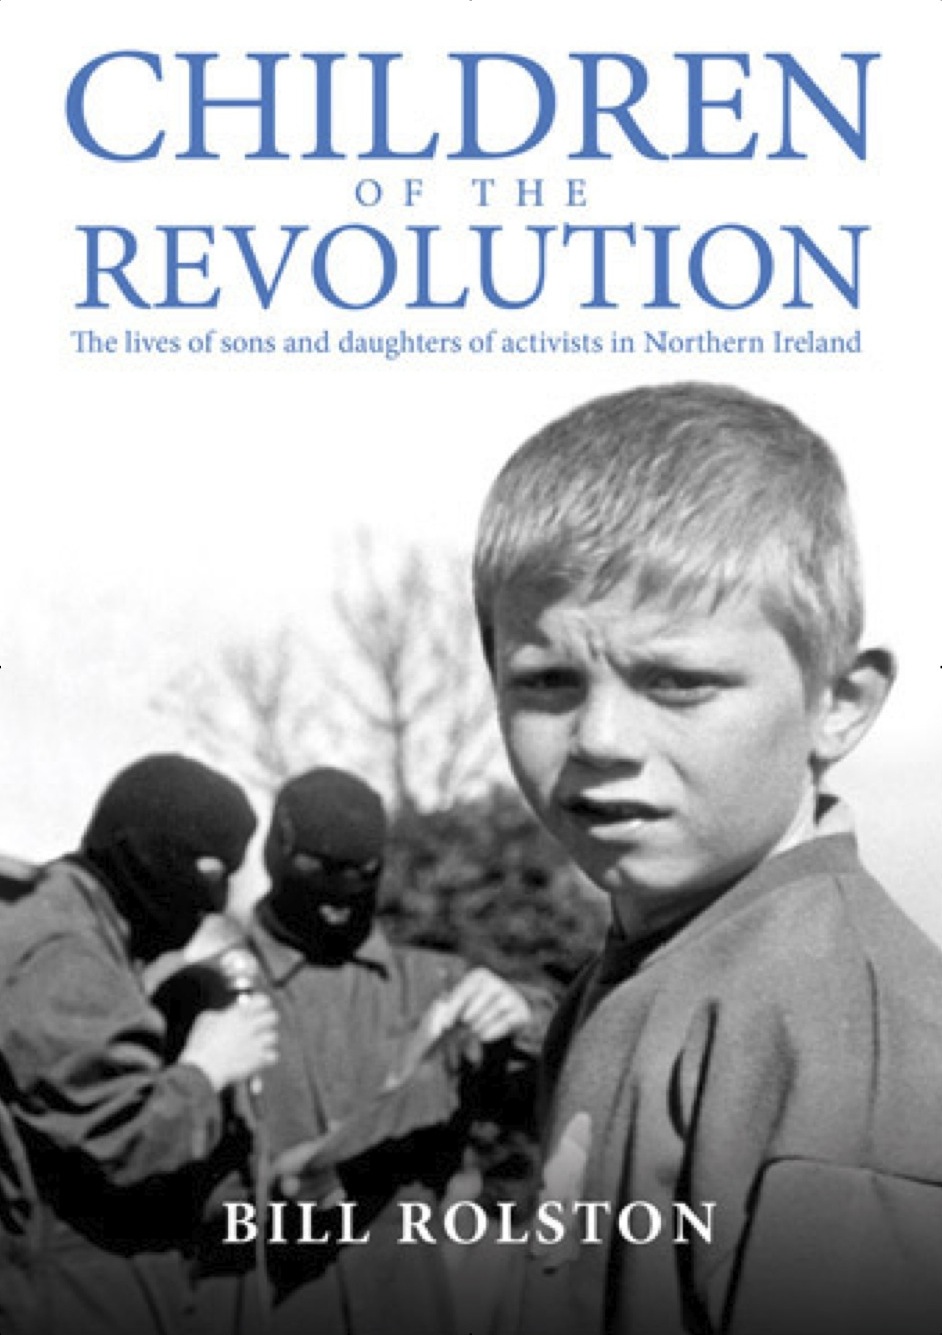 Children of the Revolution by Bill Rolston